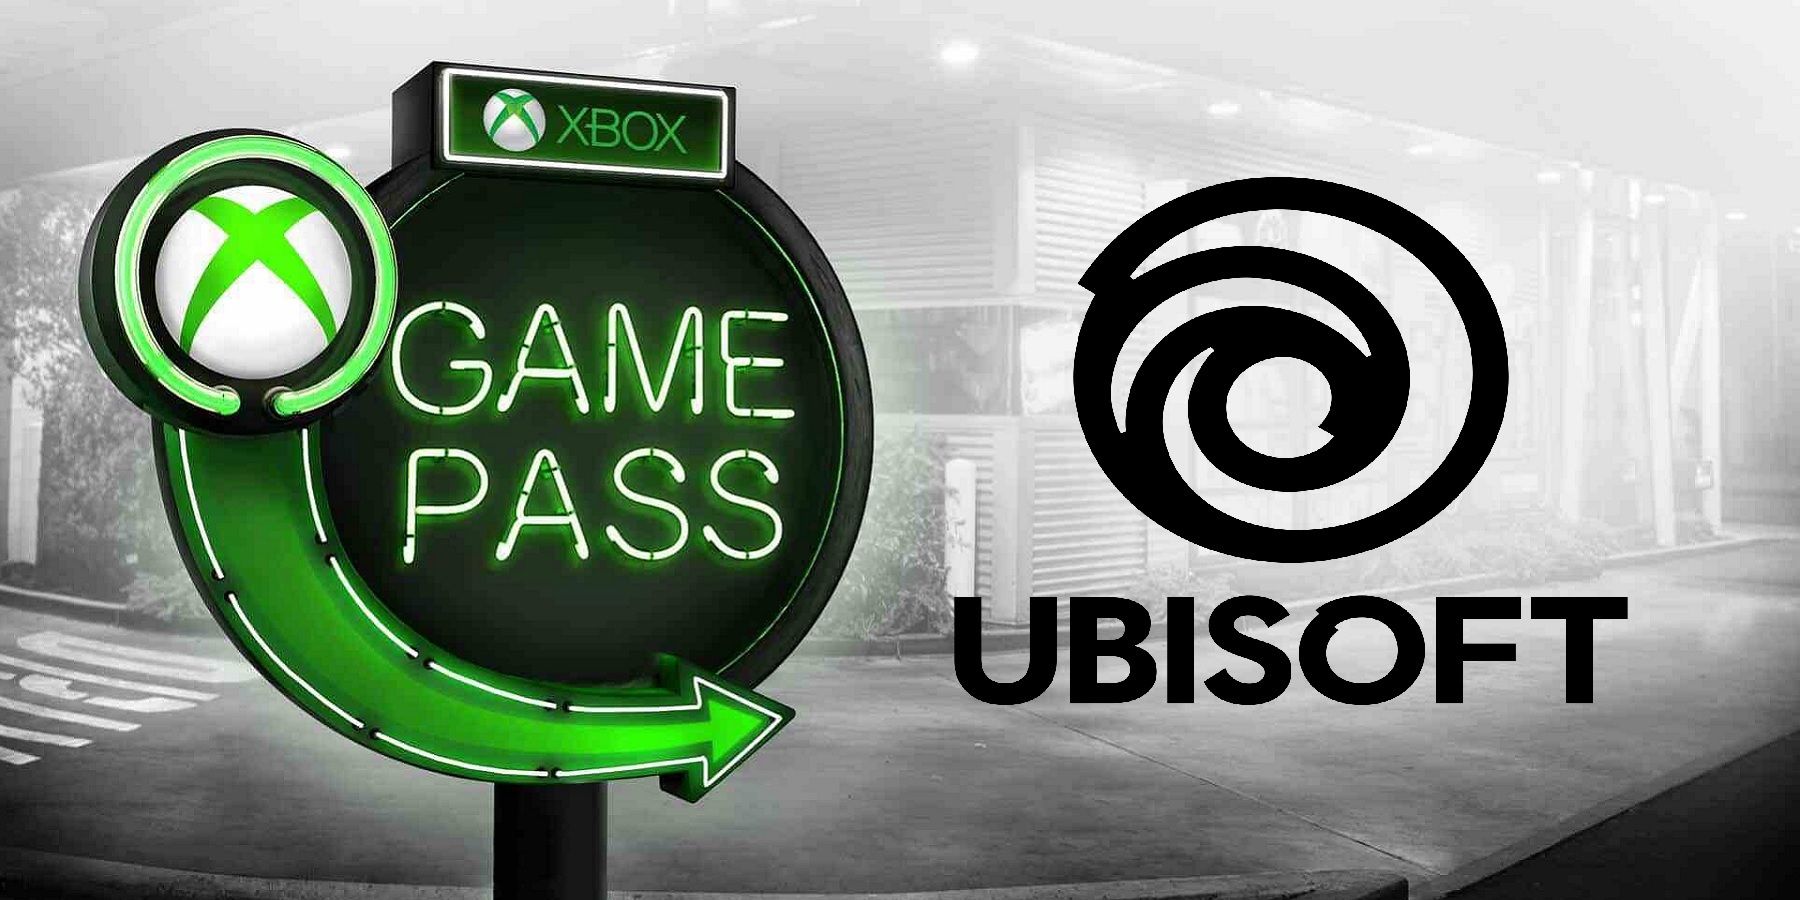 xbox game pass and ubisoft logo